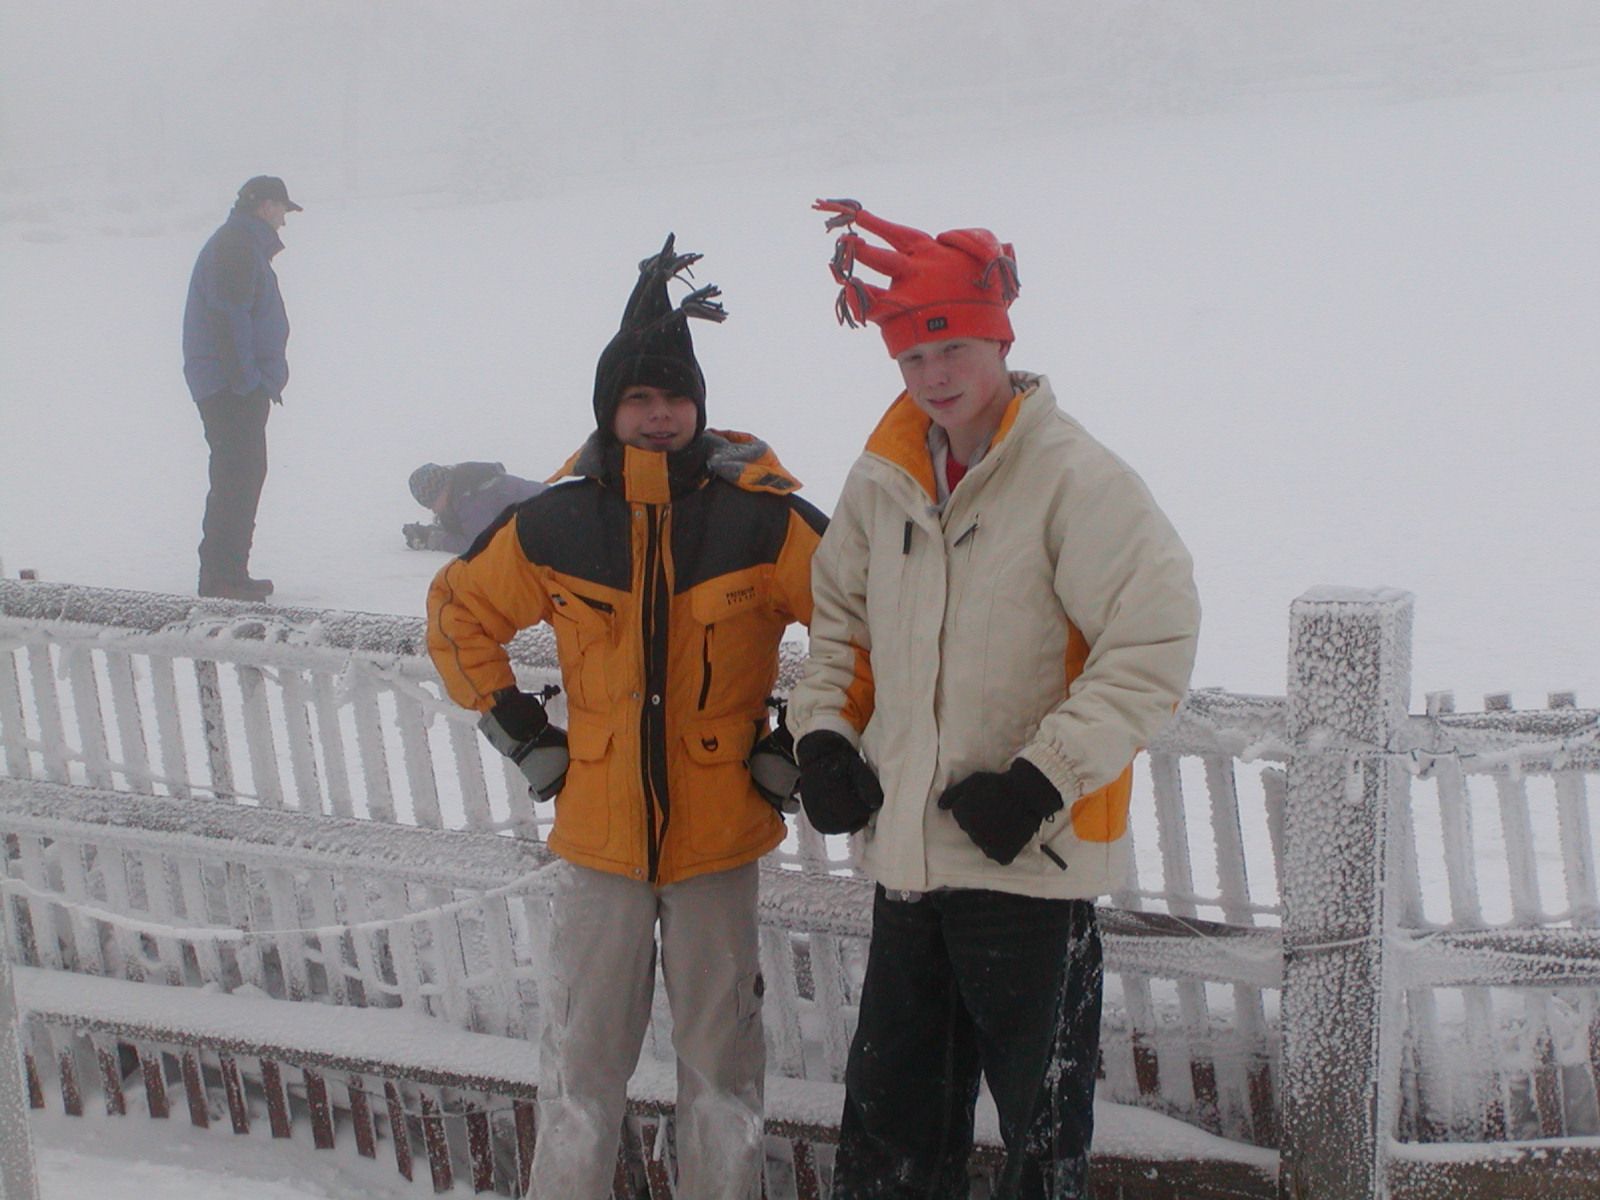 Ian and Brandan at Beech Mountain Sleding Area on December 6, 2003.